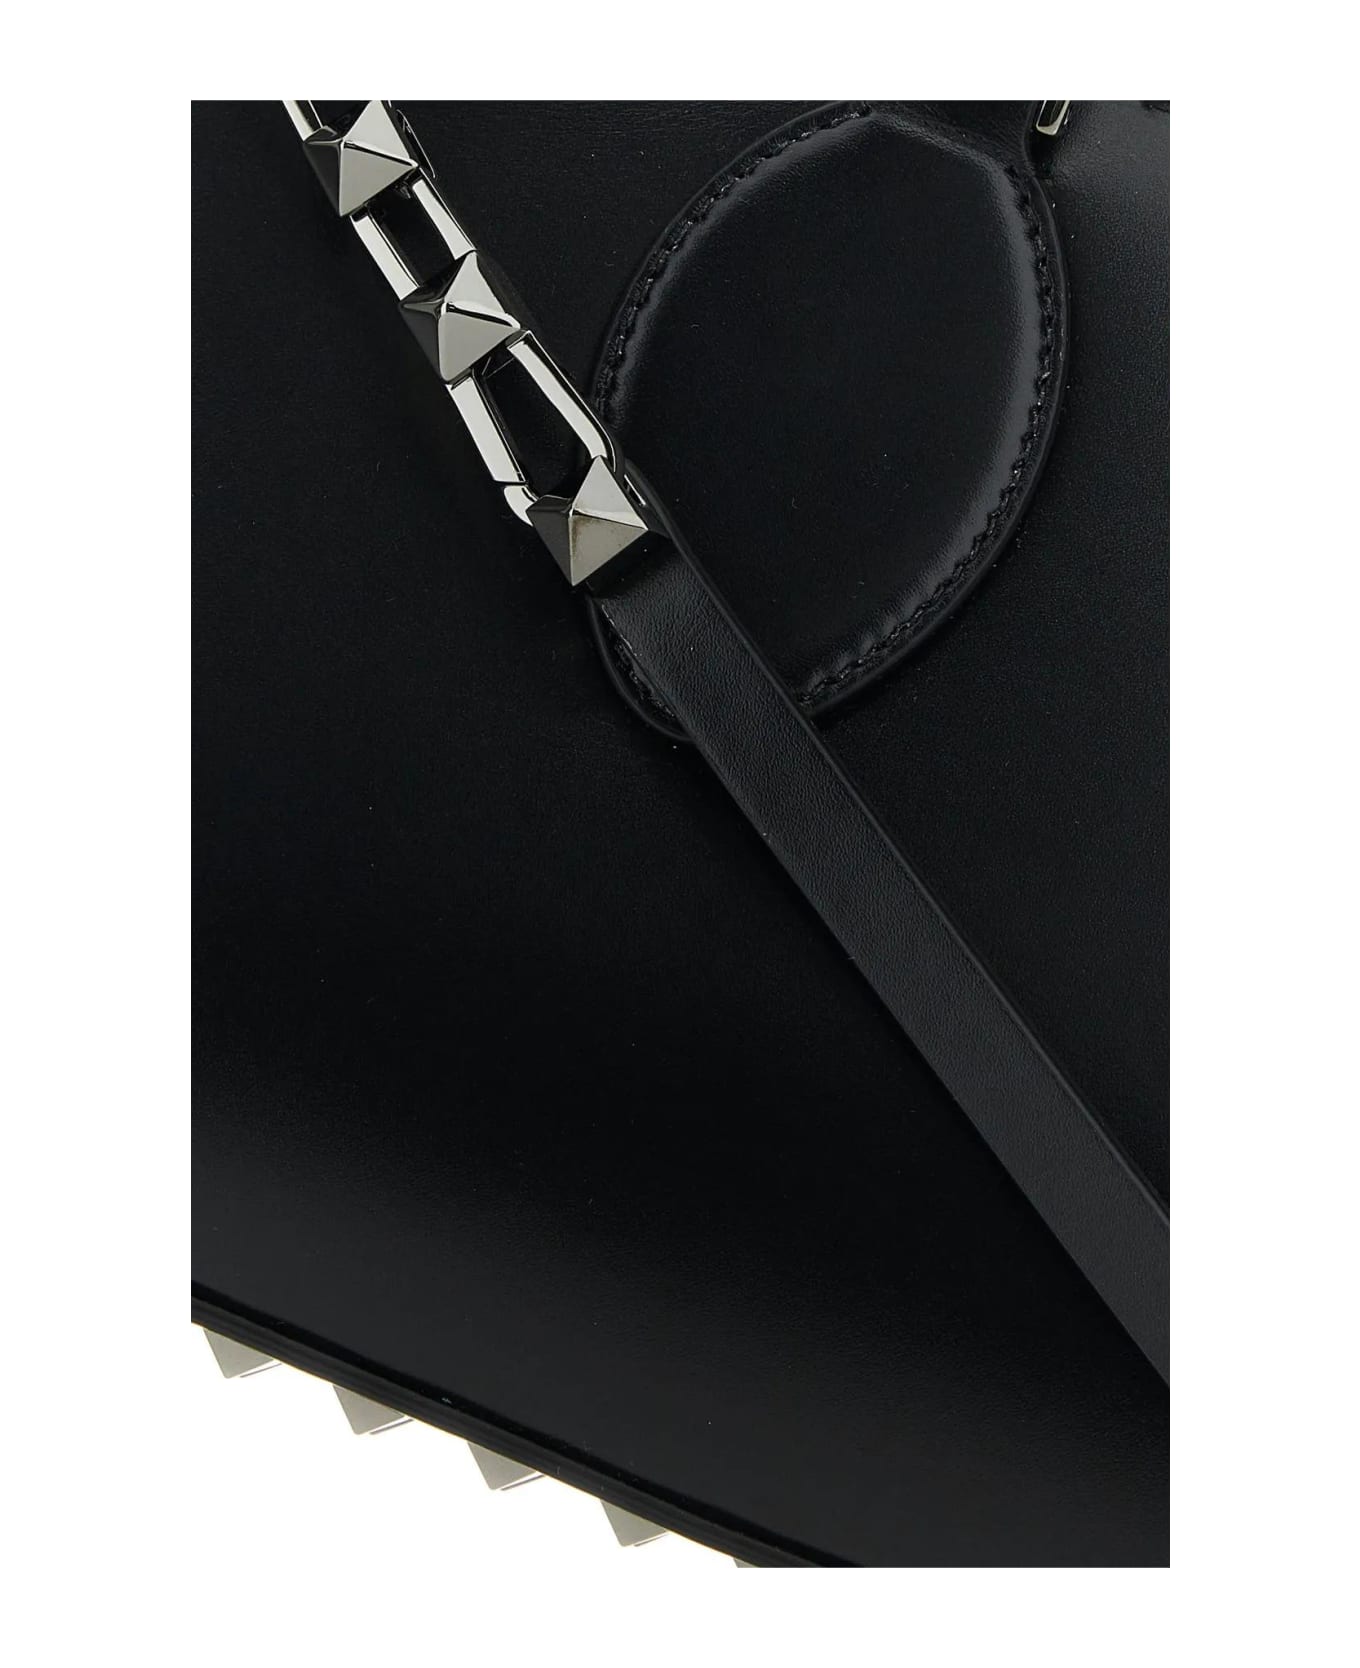 Valentino Garavani Black Leather Rockstud Handbag - NERO トラベルバッグ